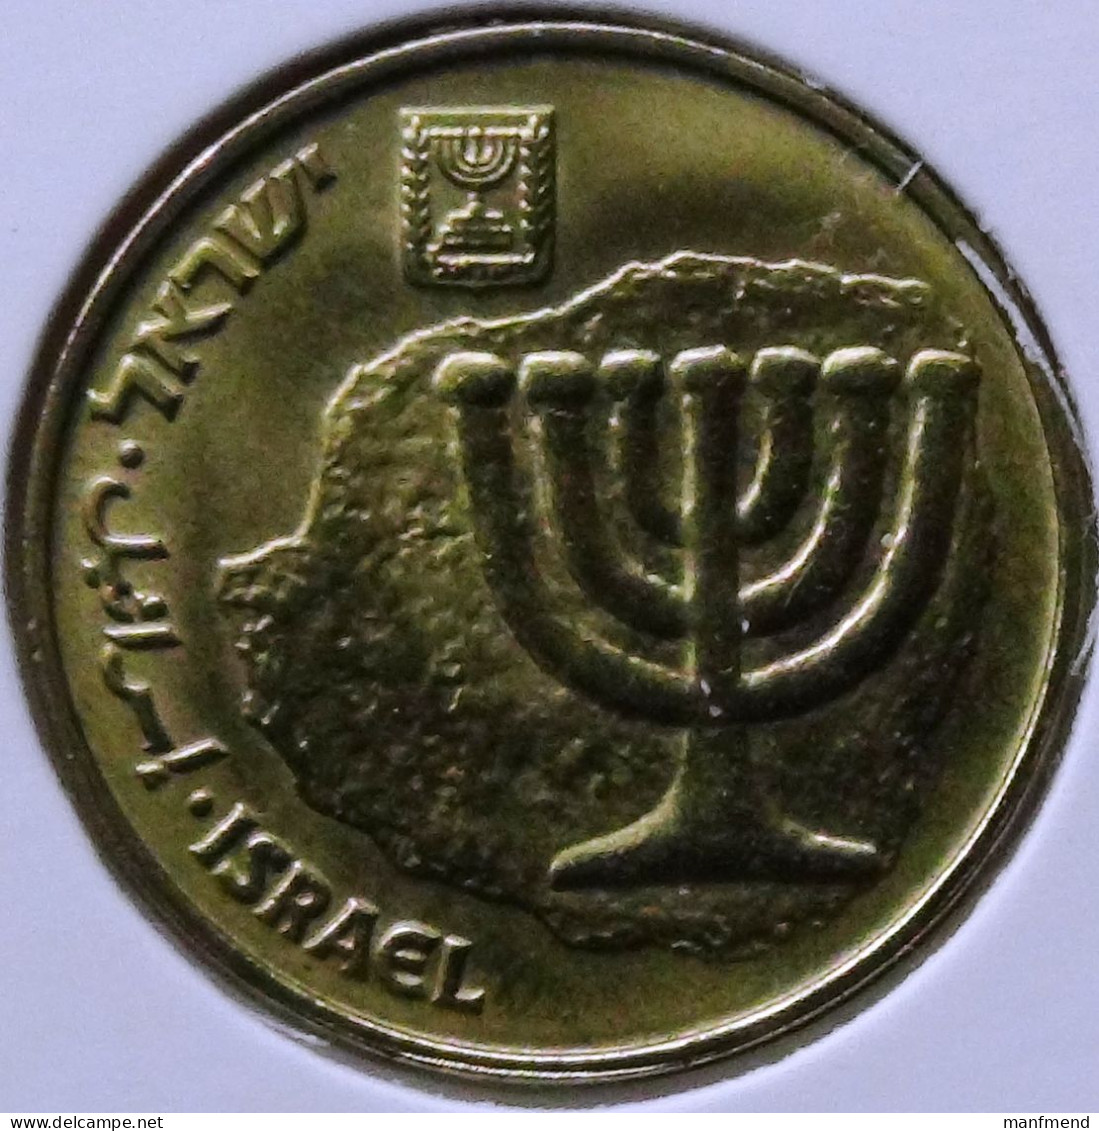 Israel - 1991 - KM 158 - 10 Agorot - Unc - Look Scans - Israel